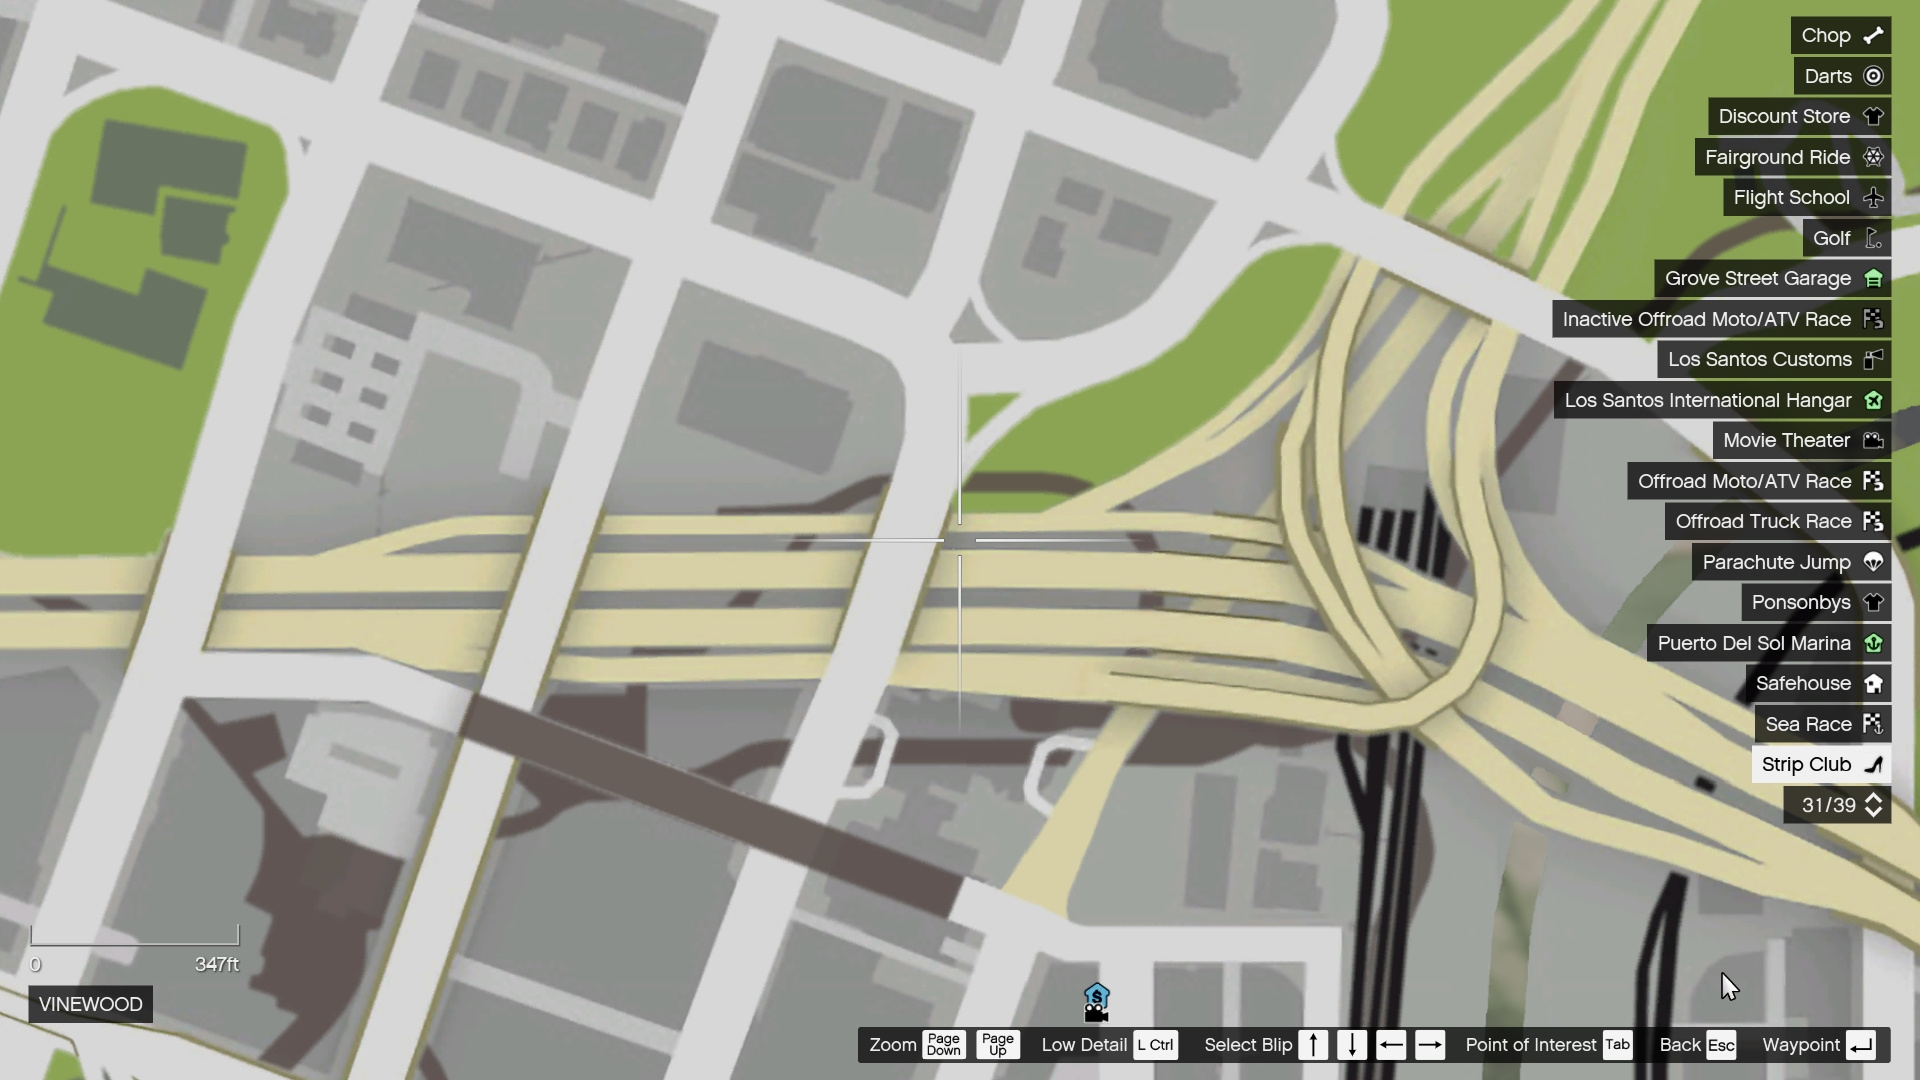 Realistic Atlas map of San Andreas [Fullmap and minimap] - Visuals & Data  FIle Modifications 